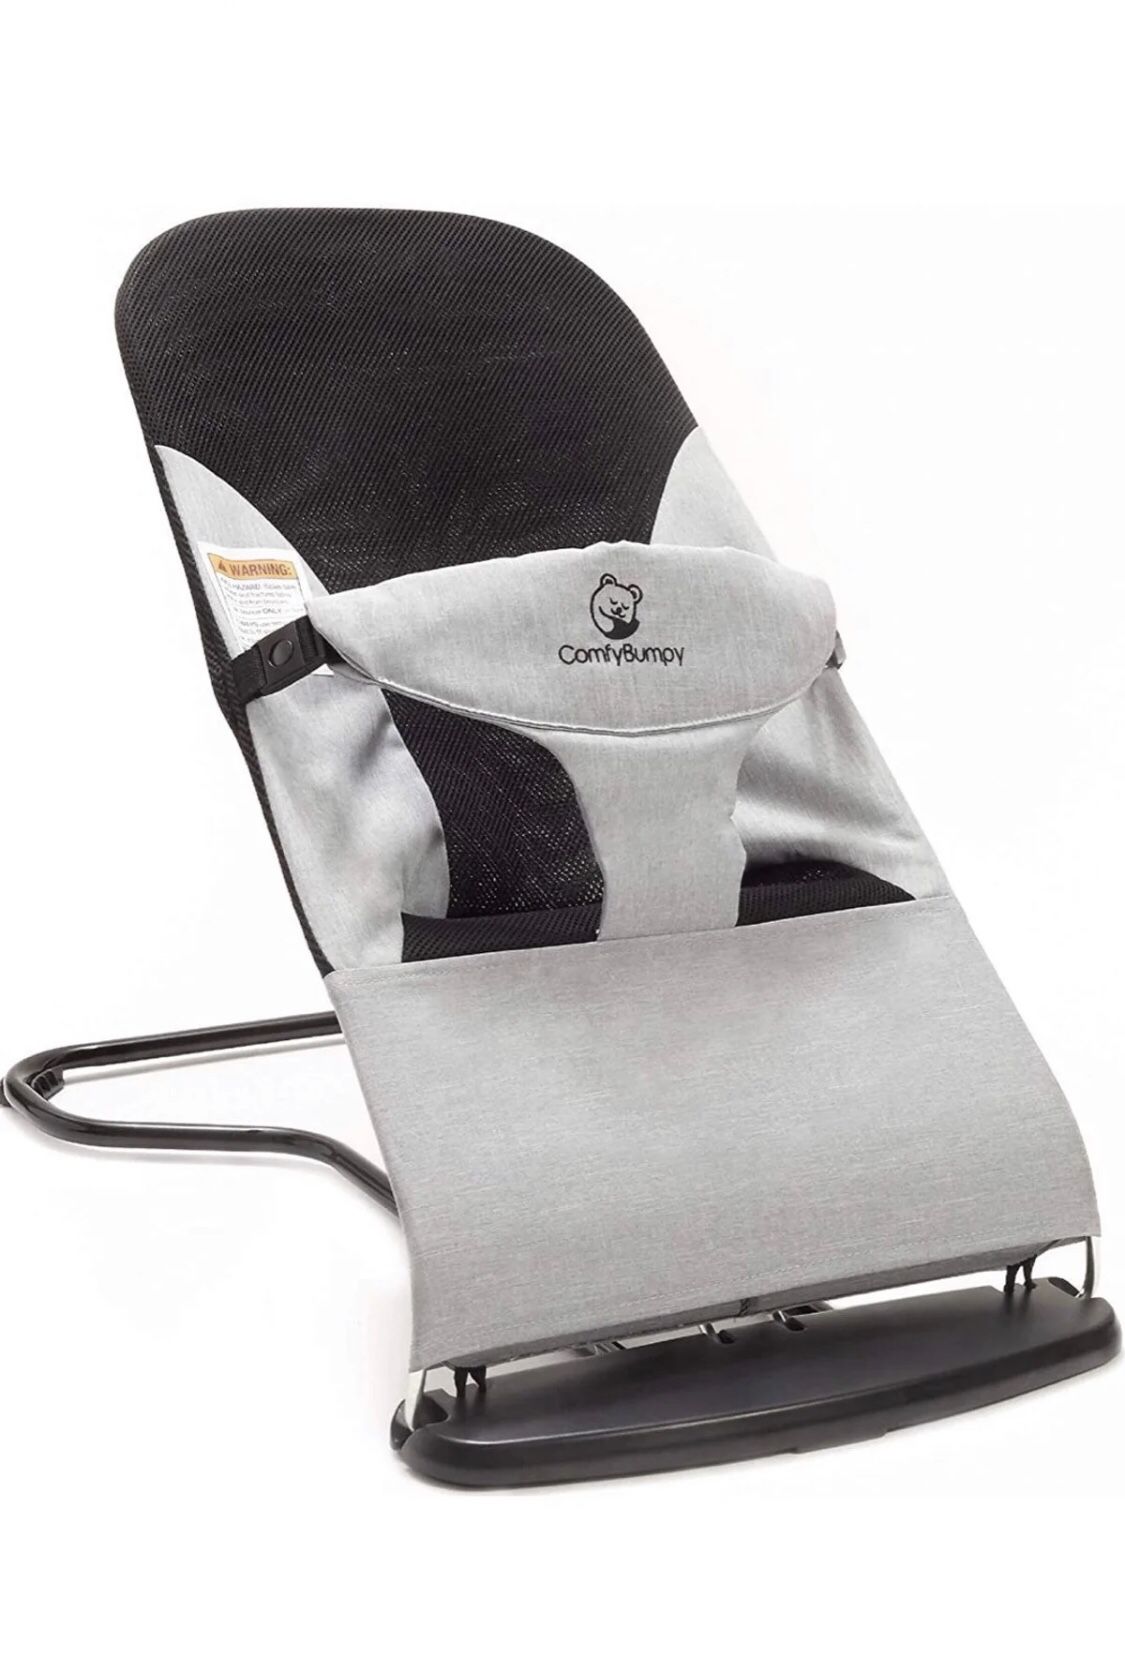 Ergonomic Baby Bouncer Seat